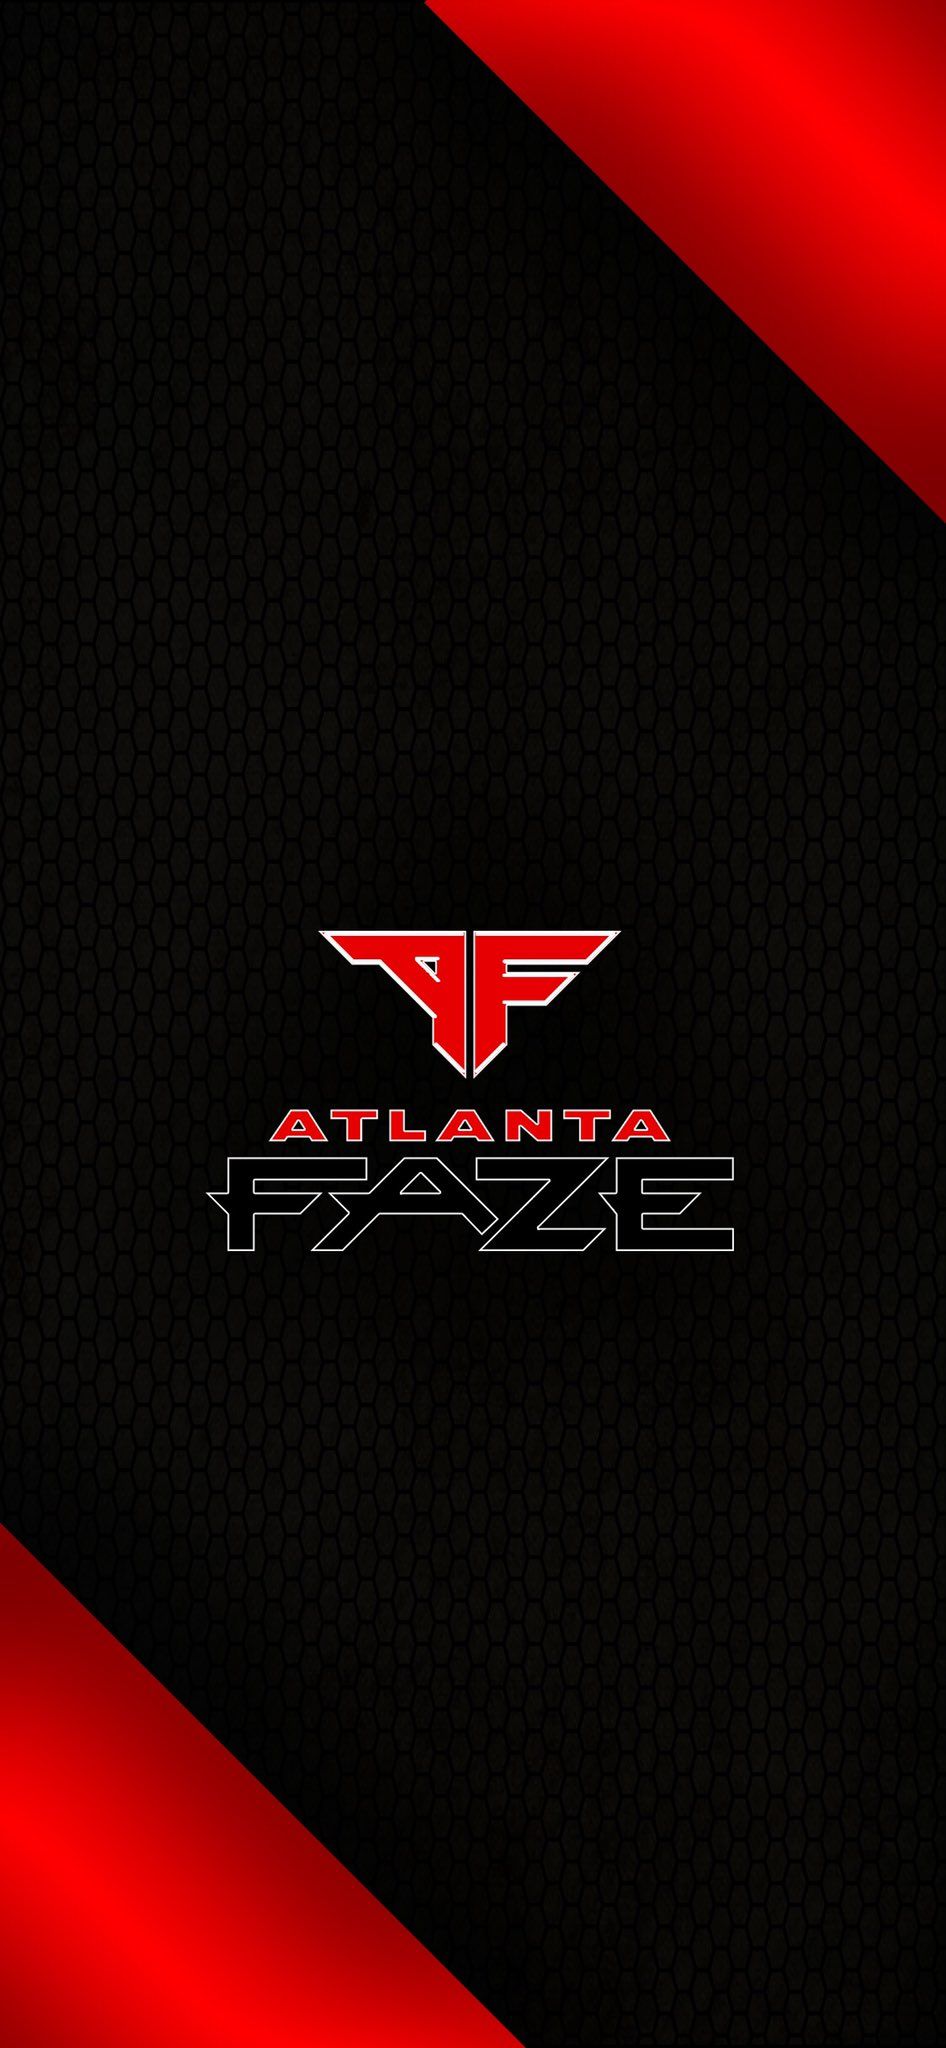 Atlanta FaZe wallpaper. Likes .twitter.com